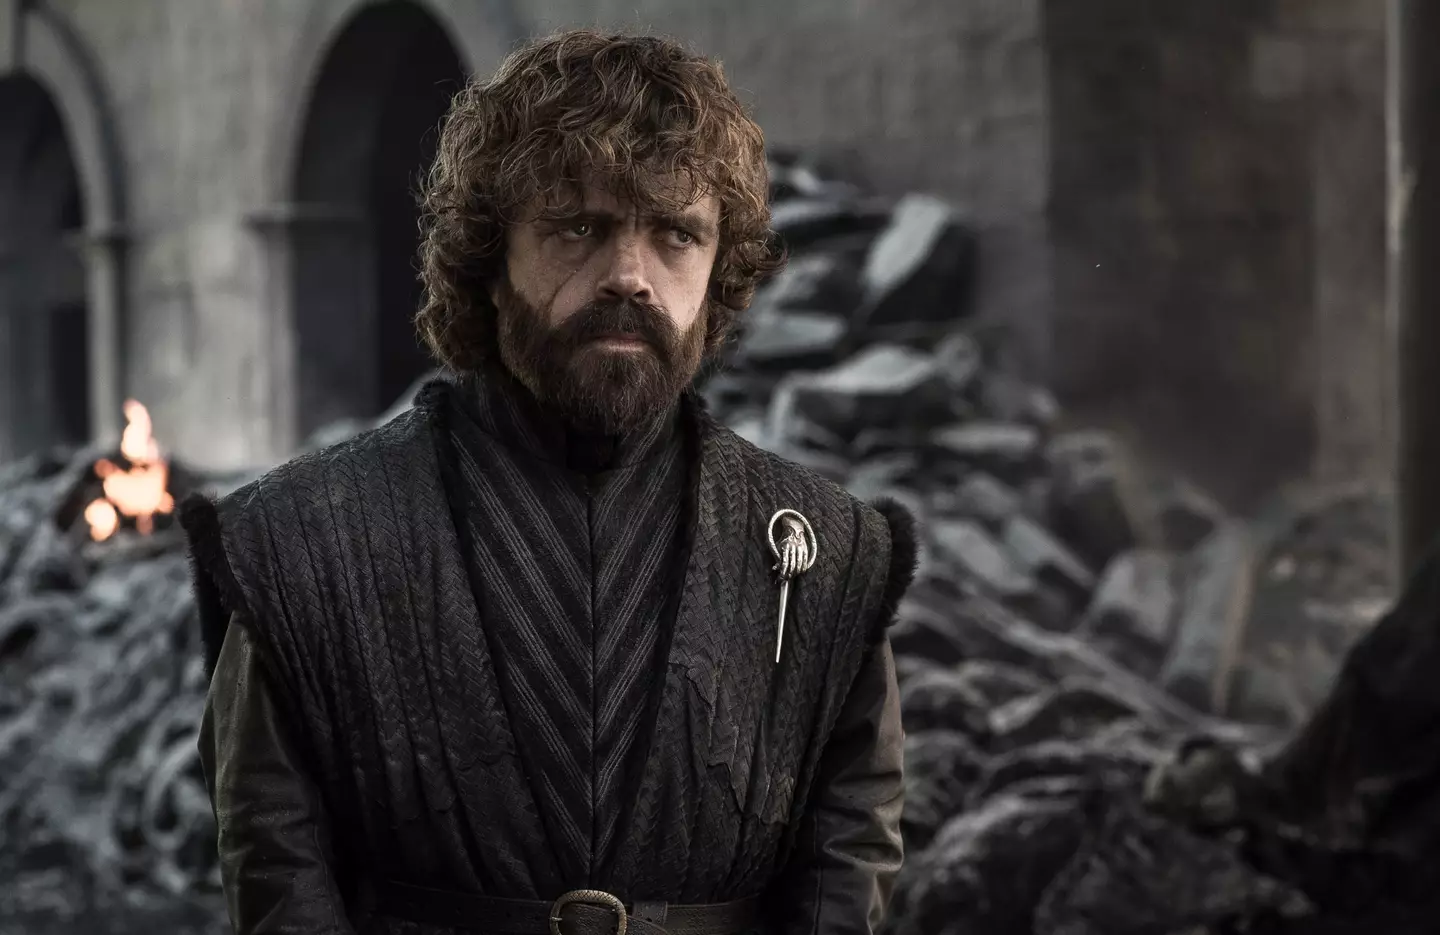 Peter Dinklage as Tyrian Lannister in HBO's Game of Thrones.